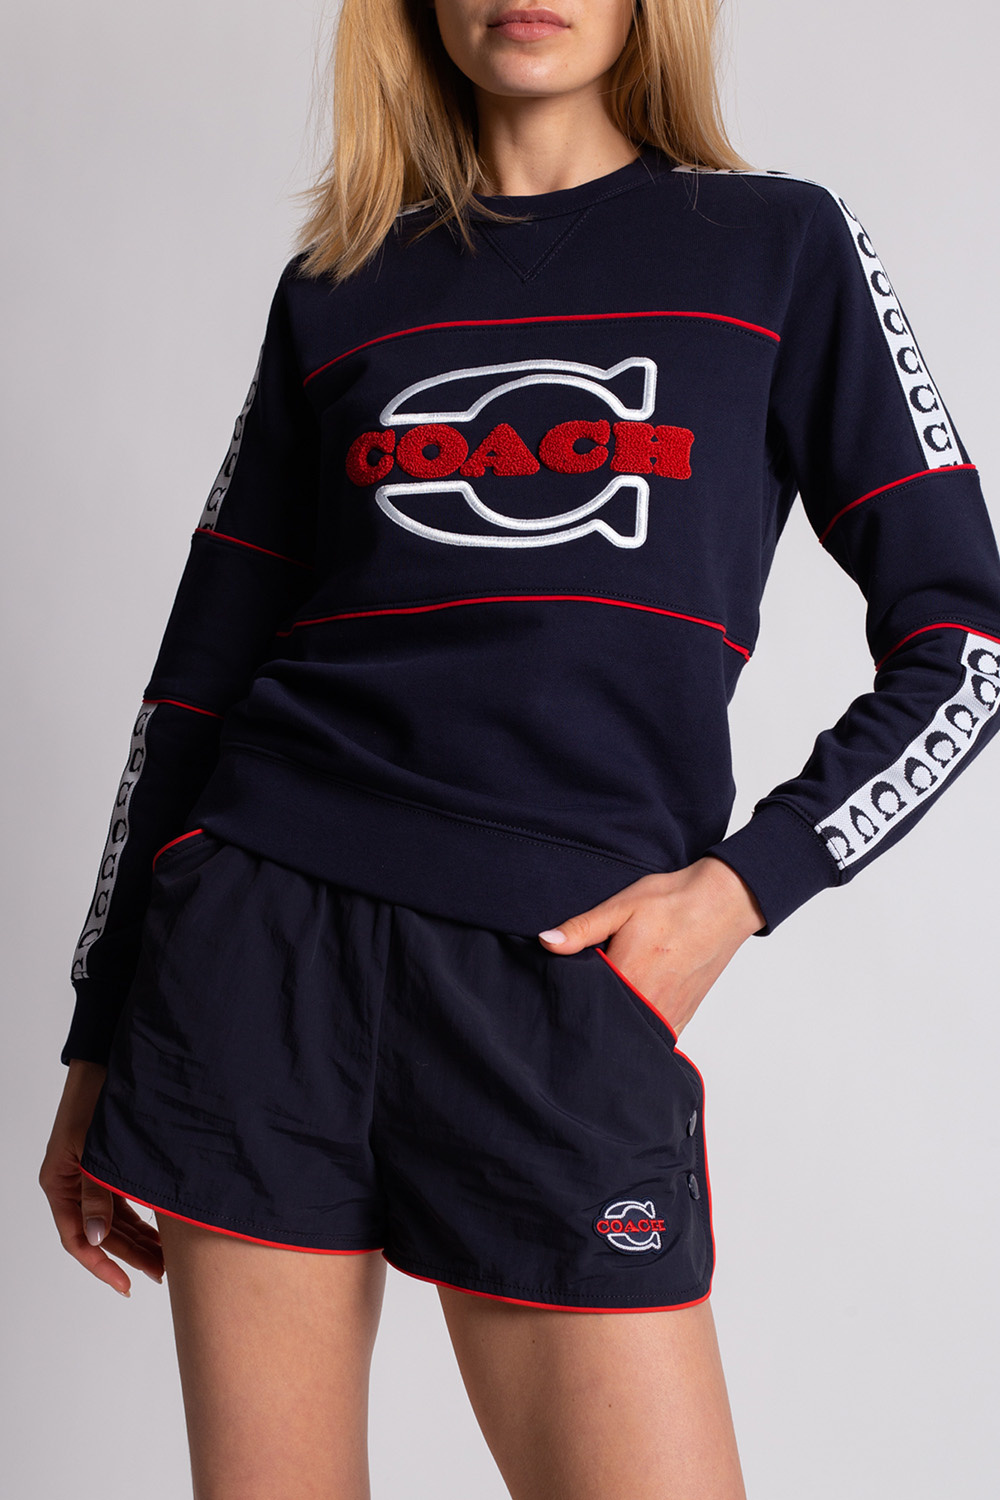 Coach Branded sweatshirt | Women's Clothing | Vitkac